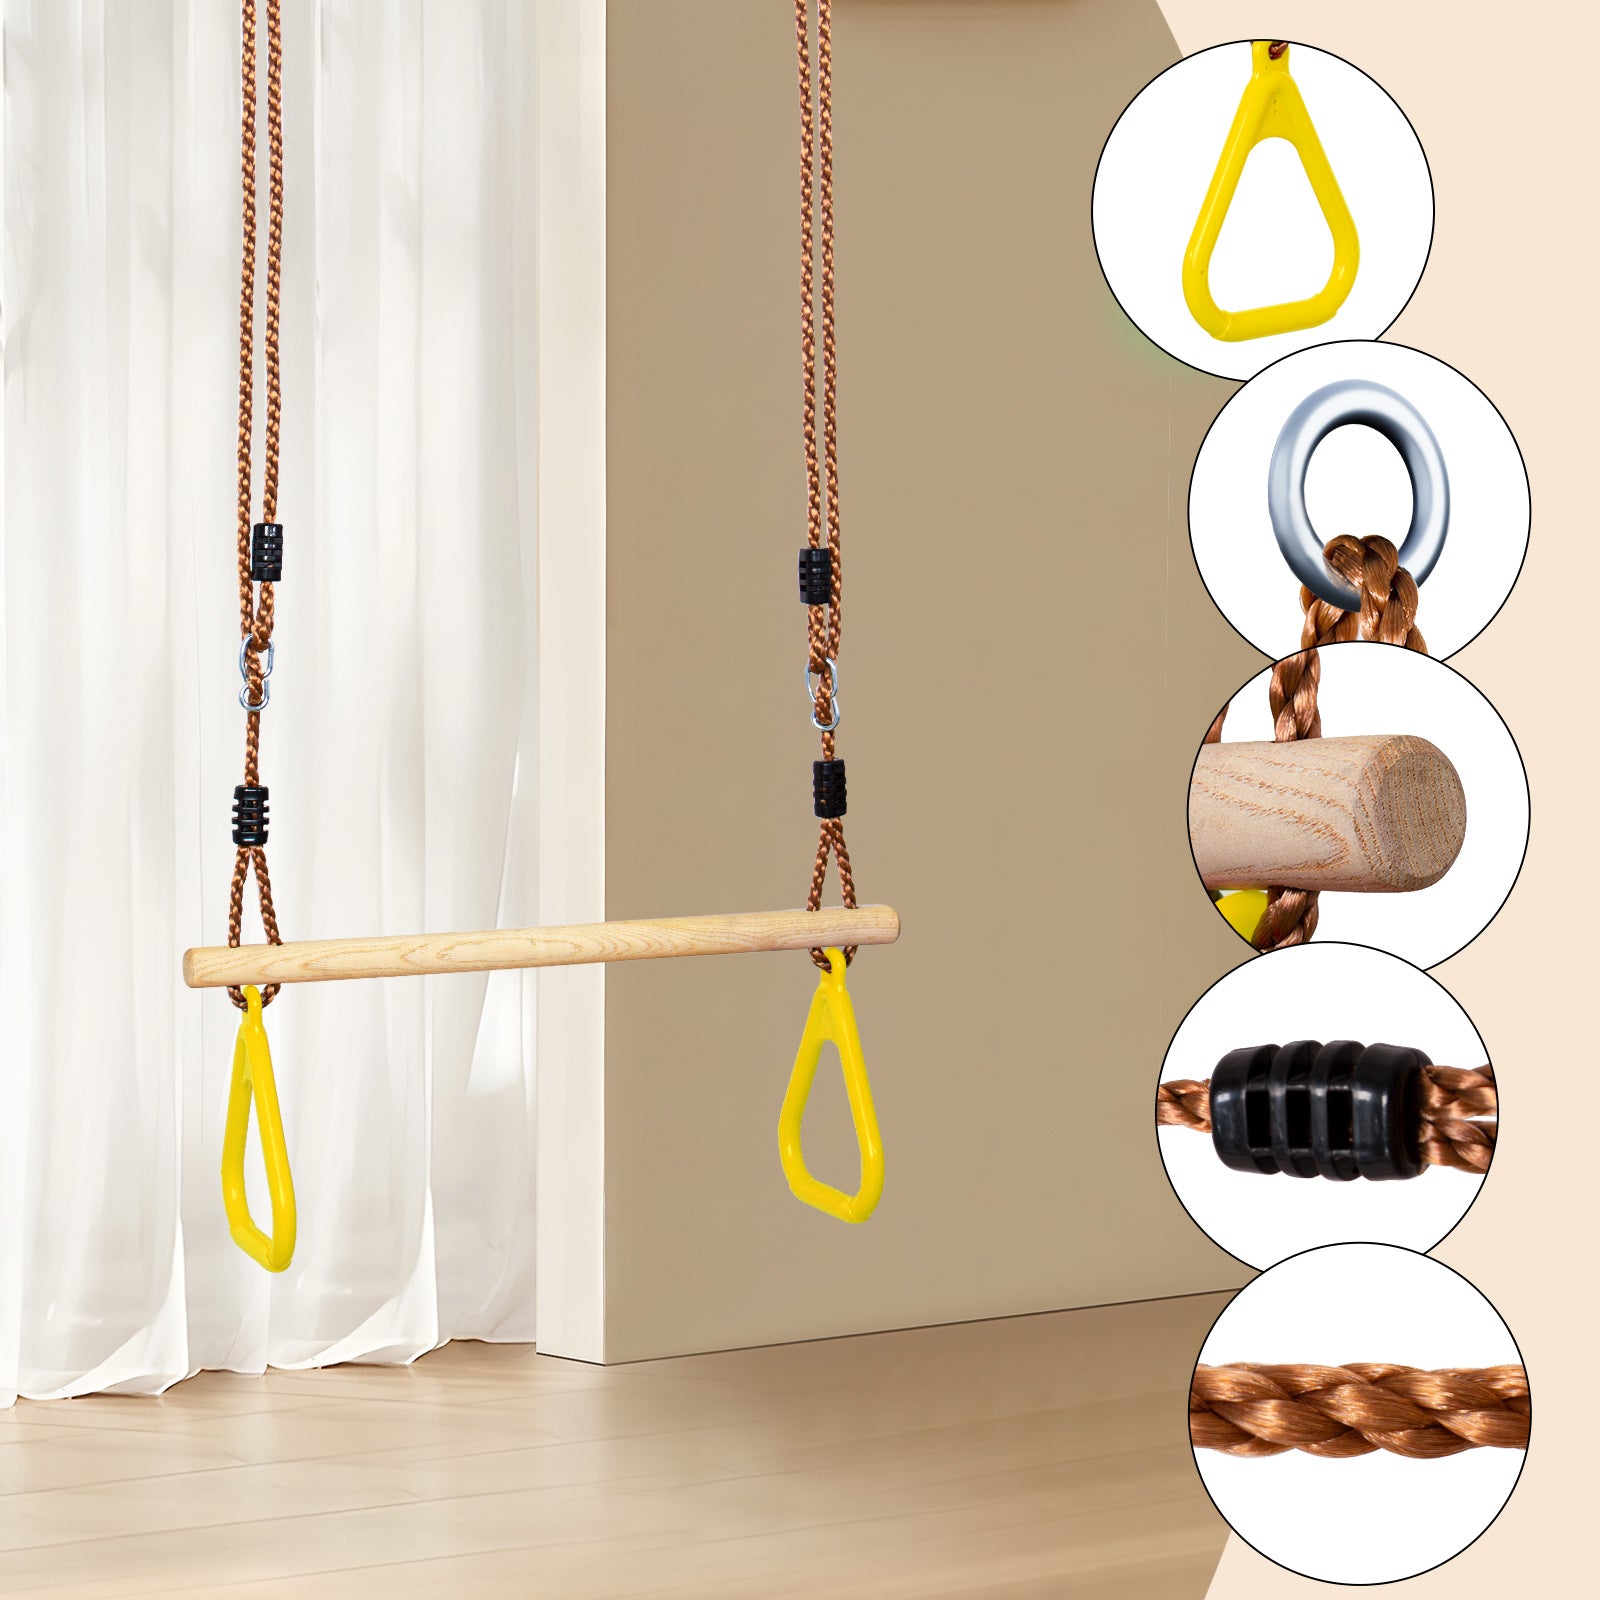 Leogreen-Wooden-Trapeze-Gymnastics-Rings-and-Bar-for-Children-Indoor-Outdoor-Garden-Games-Yellow